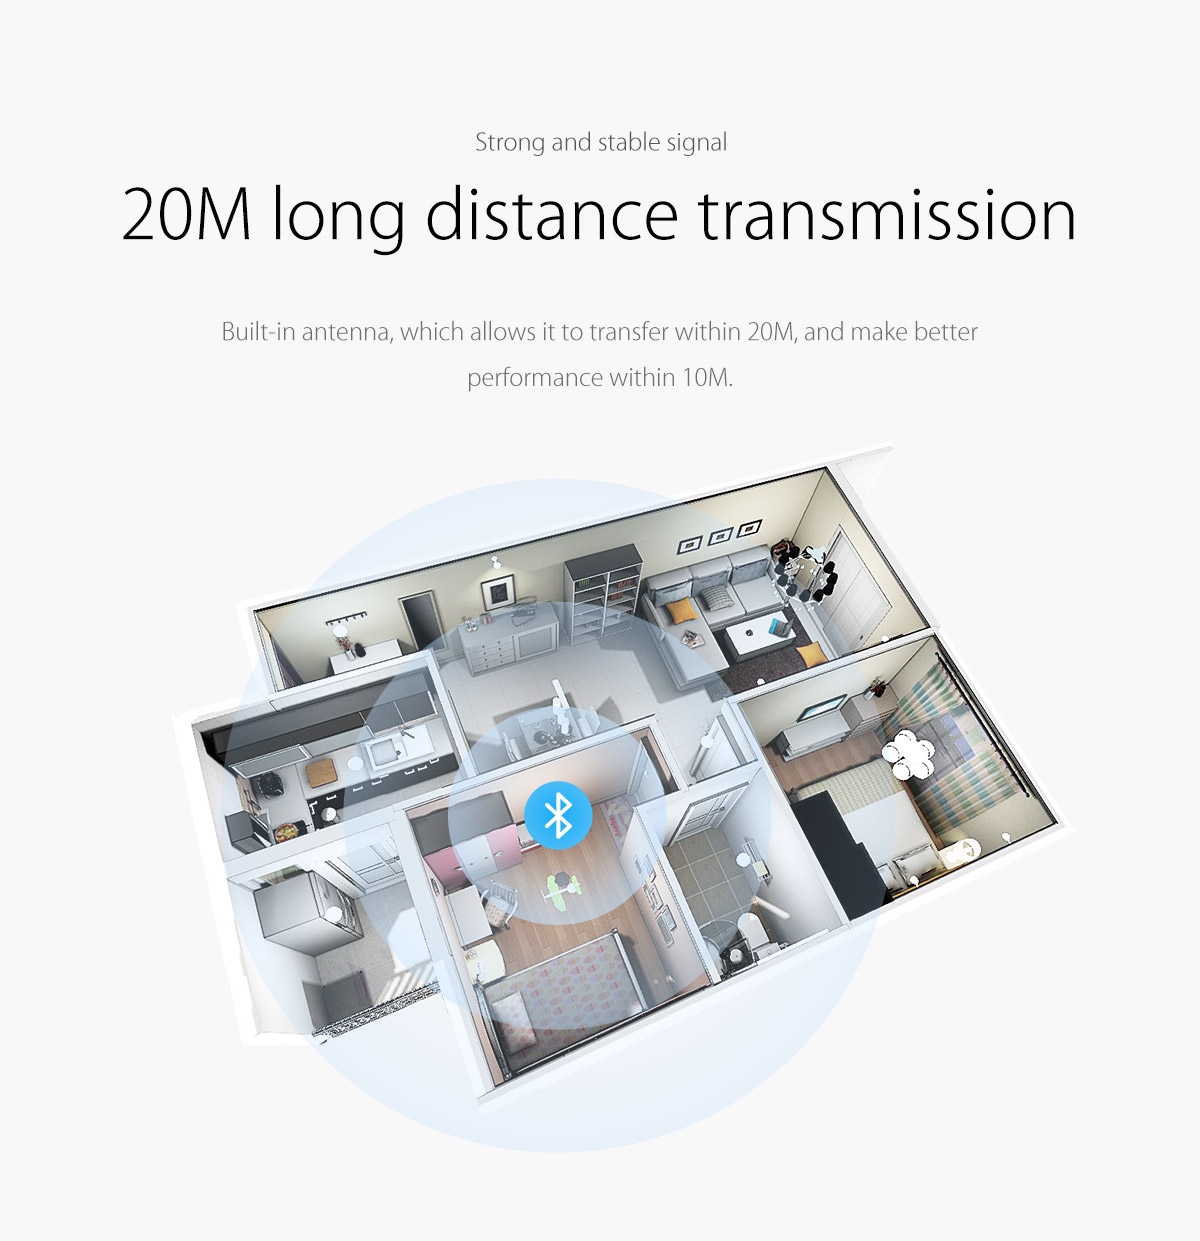 20M long distance transmission